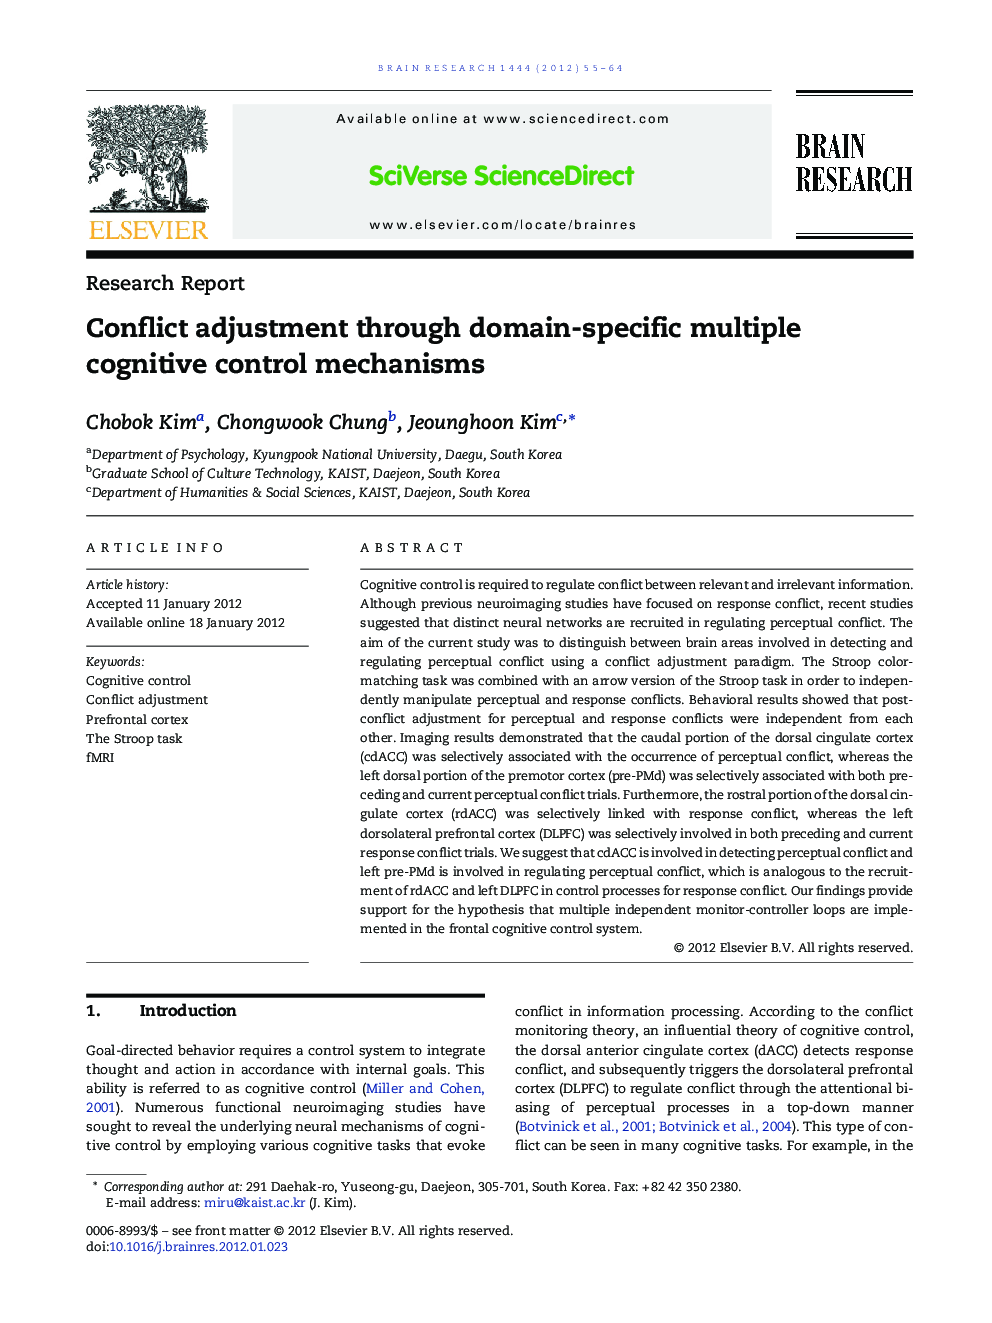 Conflict adjustment through domain-specific multiple cognitive control mechanisms